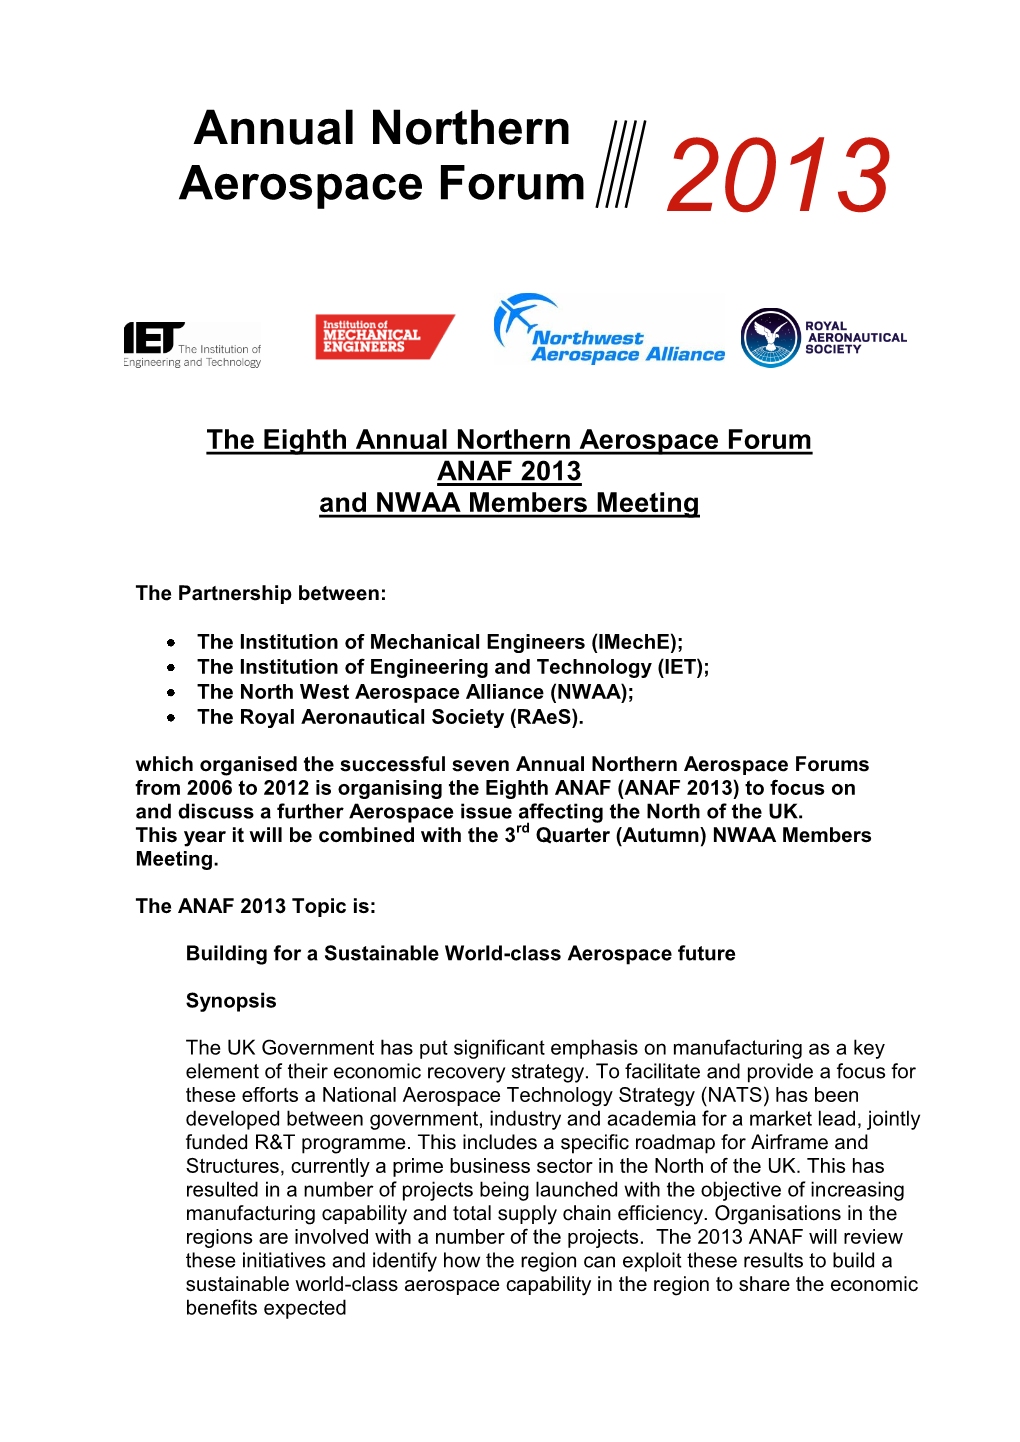 Annual Northern Aerospace Forum 2013